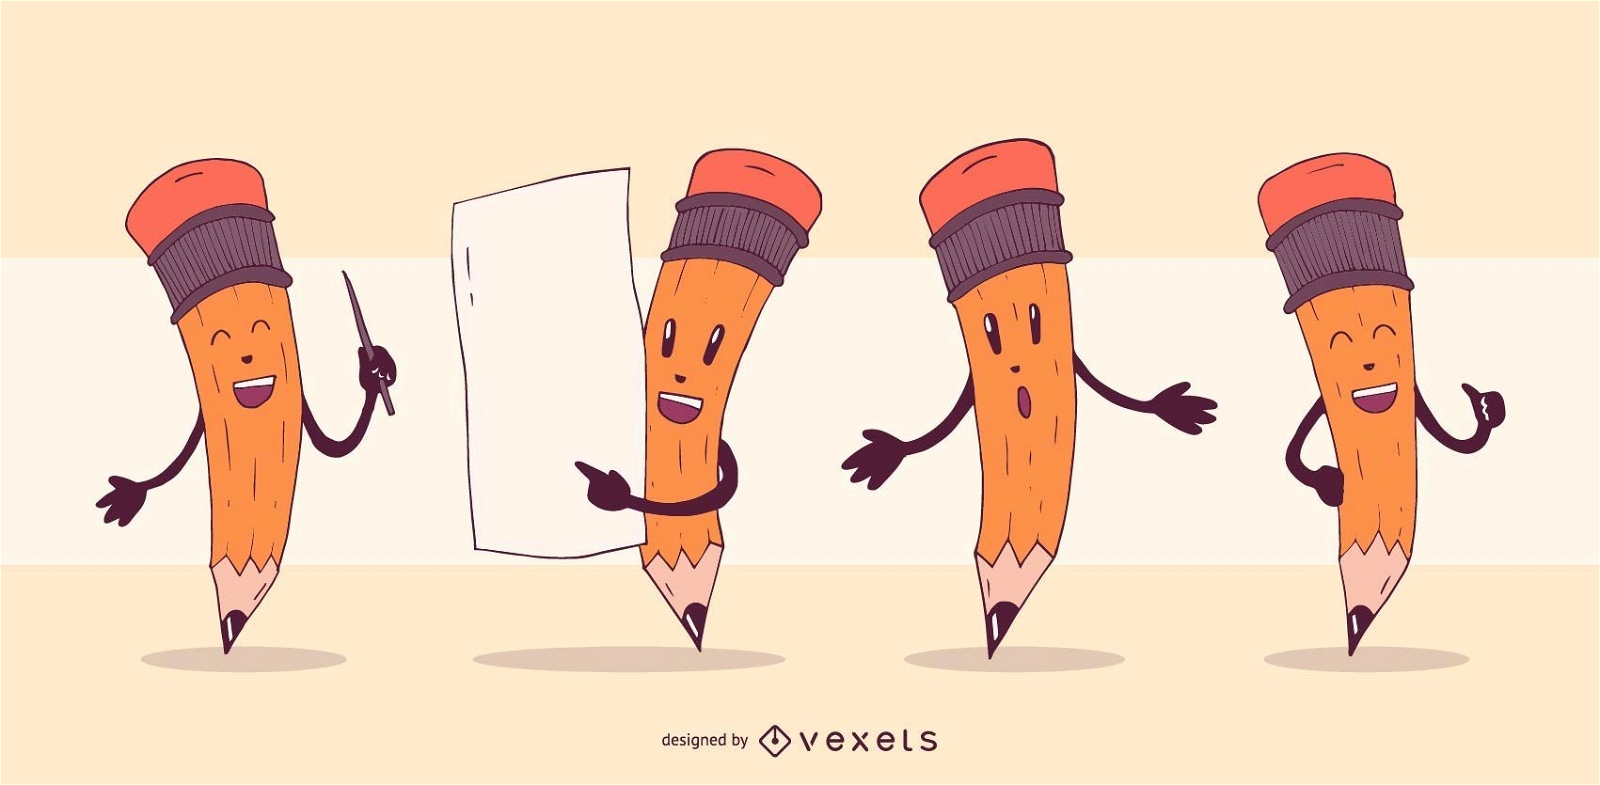 Pencil characters cartoon set